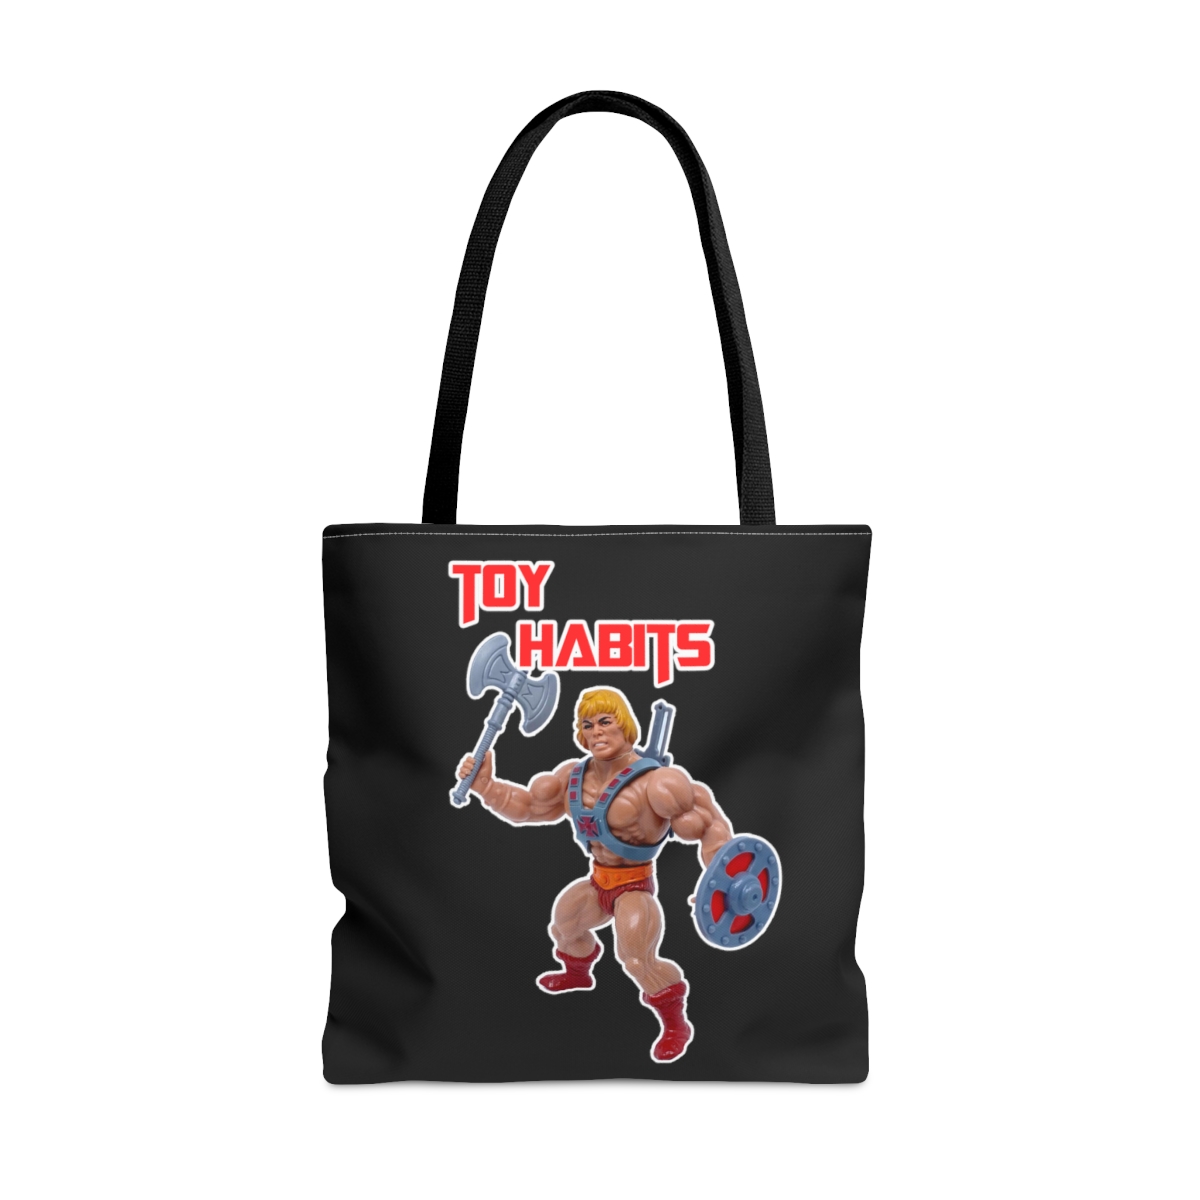 He-Man Tote Bag product thumbnail image